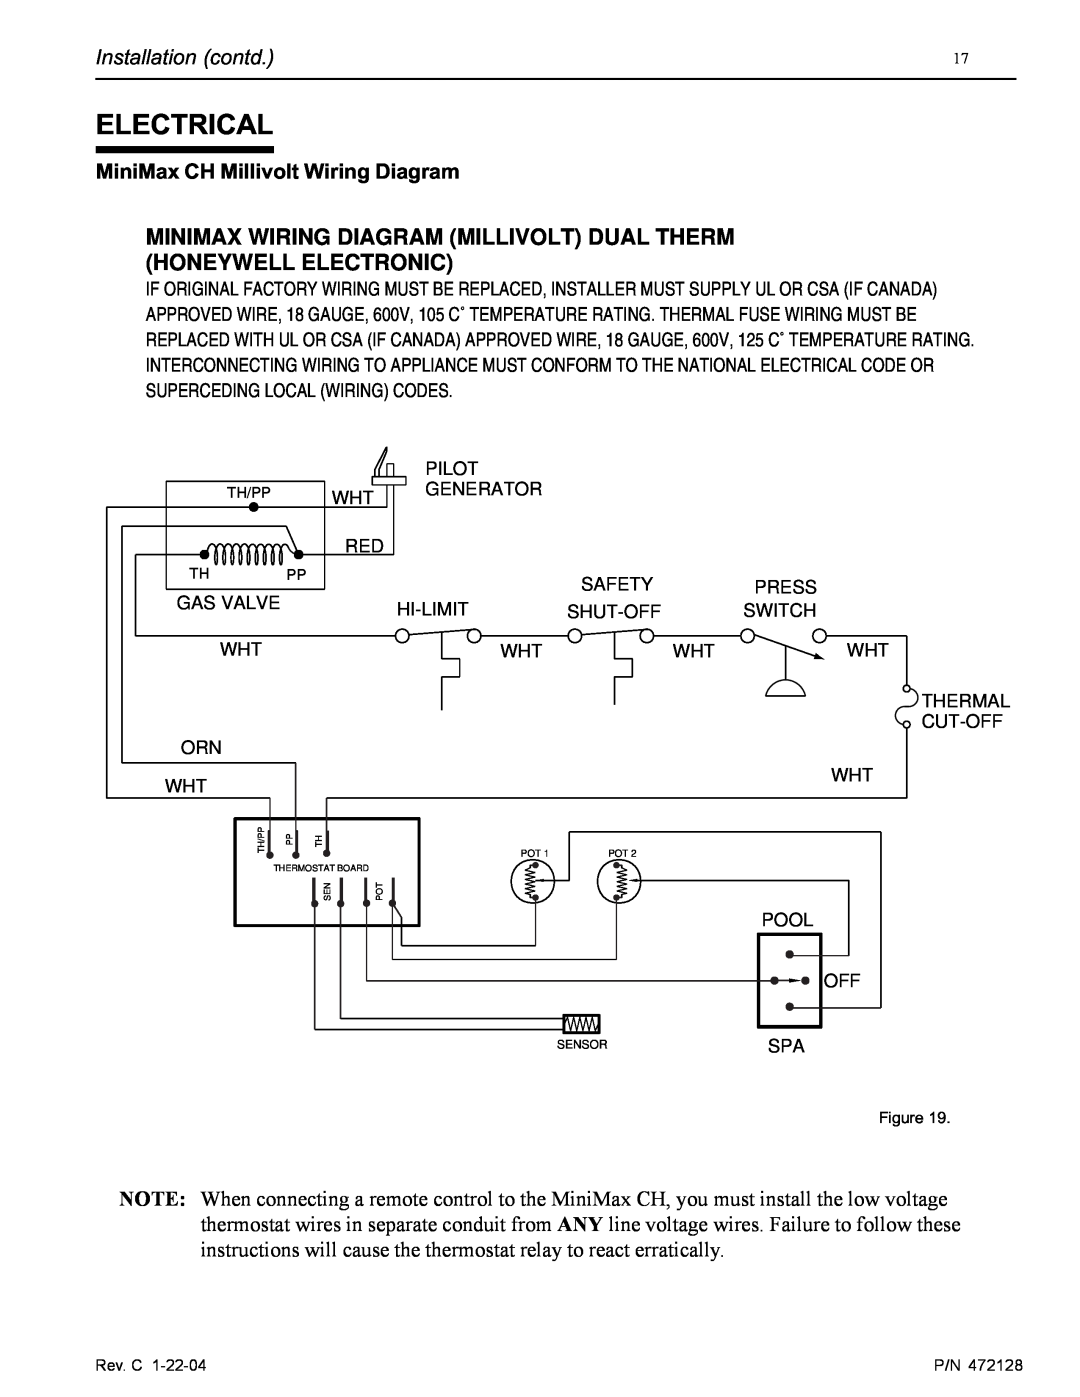 Pentair installation manual Electrical, Installation contd, MiniMax CH Millivolt Wiring Diagram 